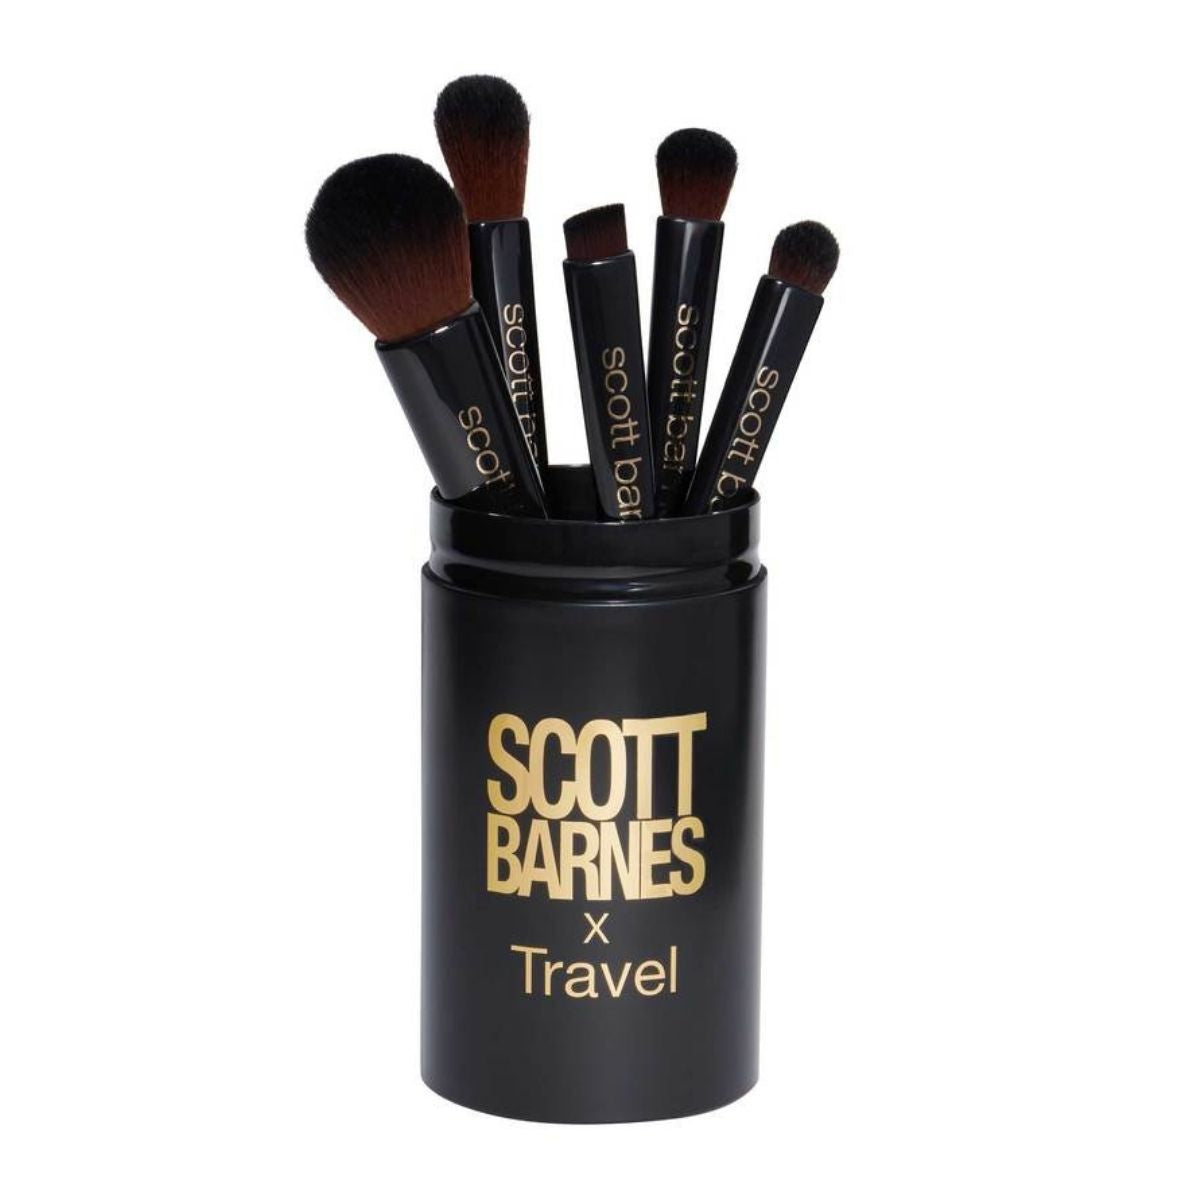 Scott Barnes Travel Brush Set